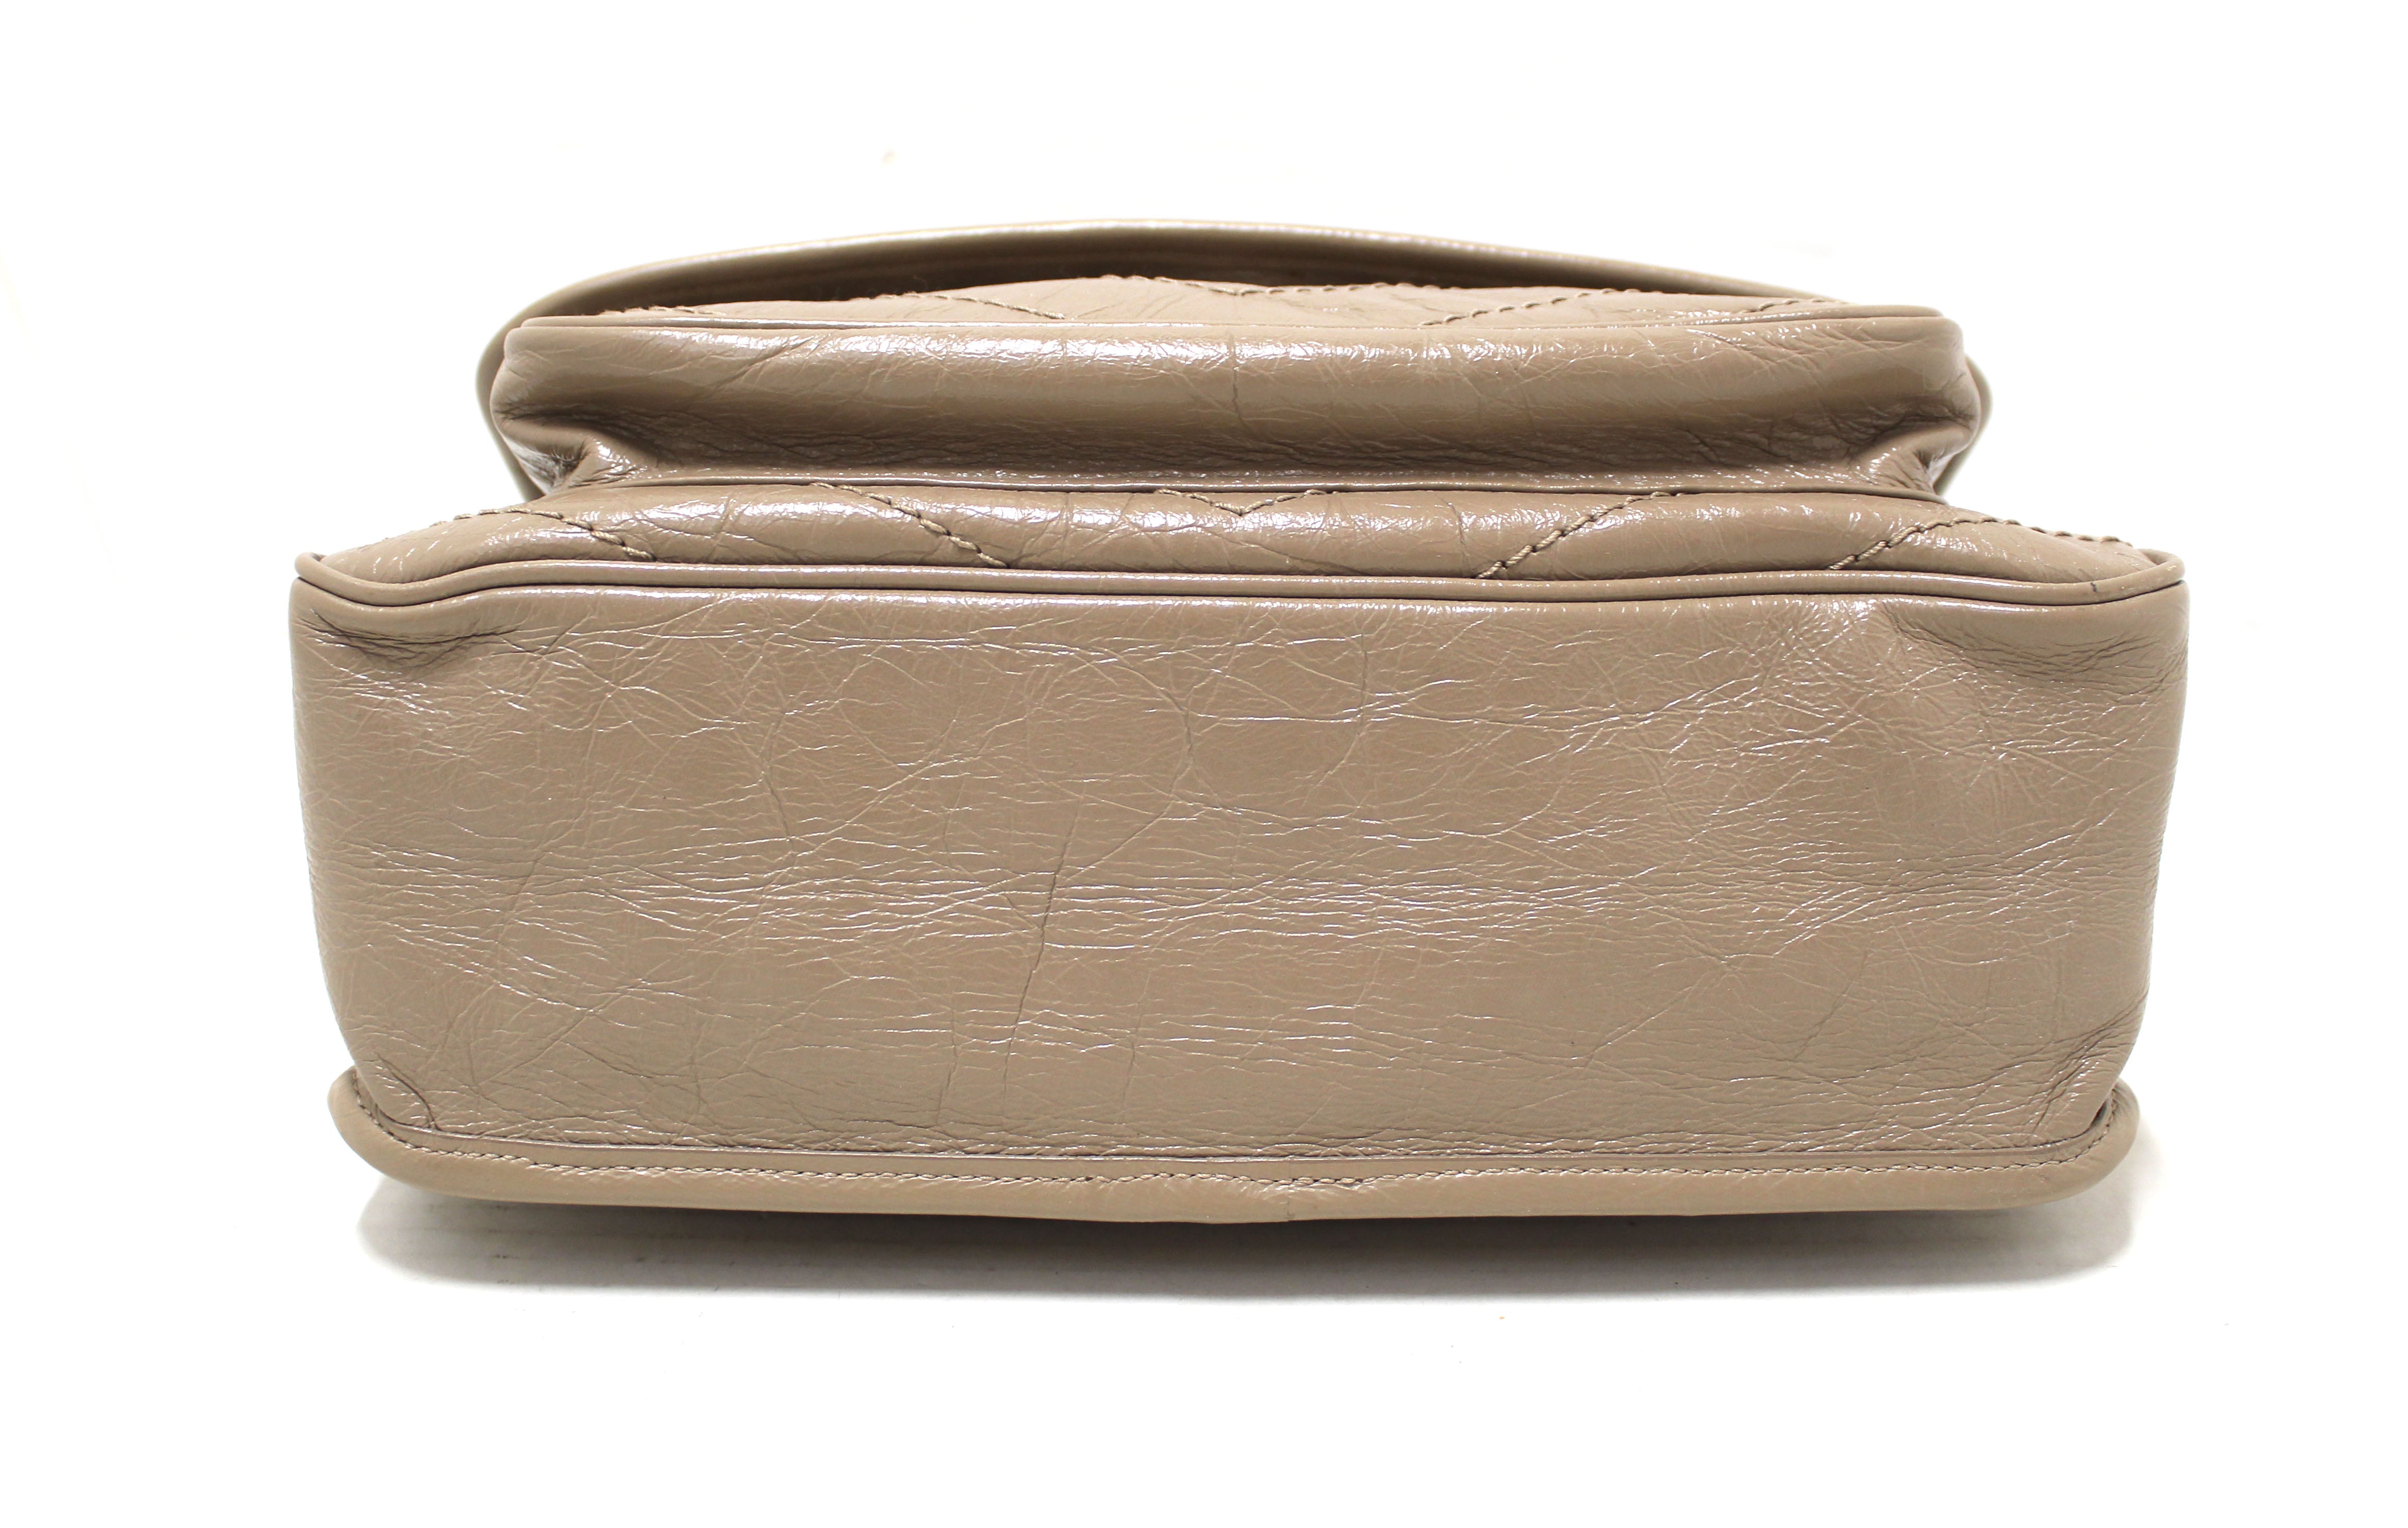 Vintage Yves Saint Laurent brown leather handbag with YSL marks